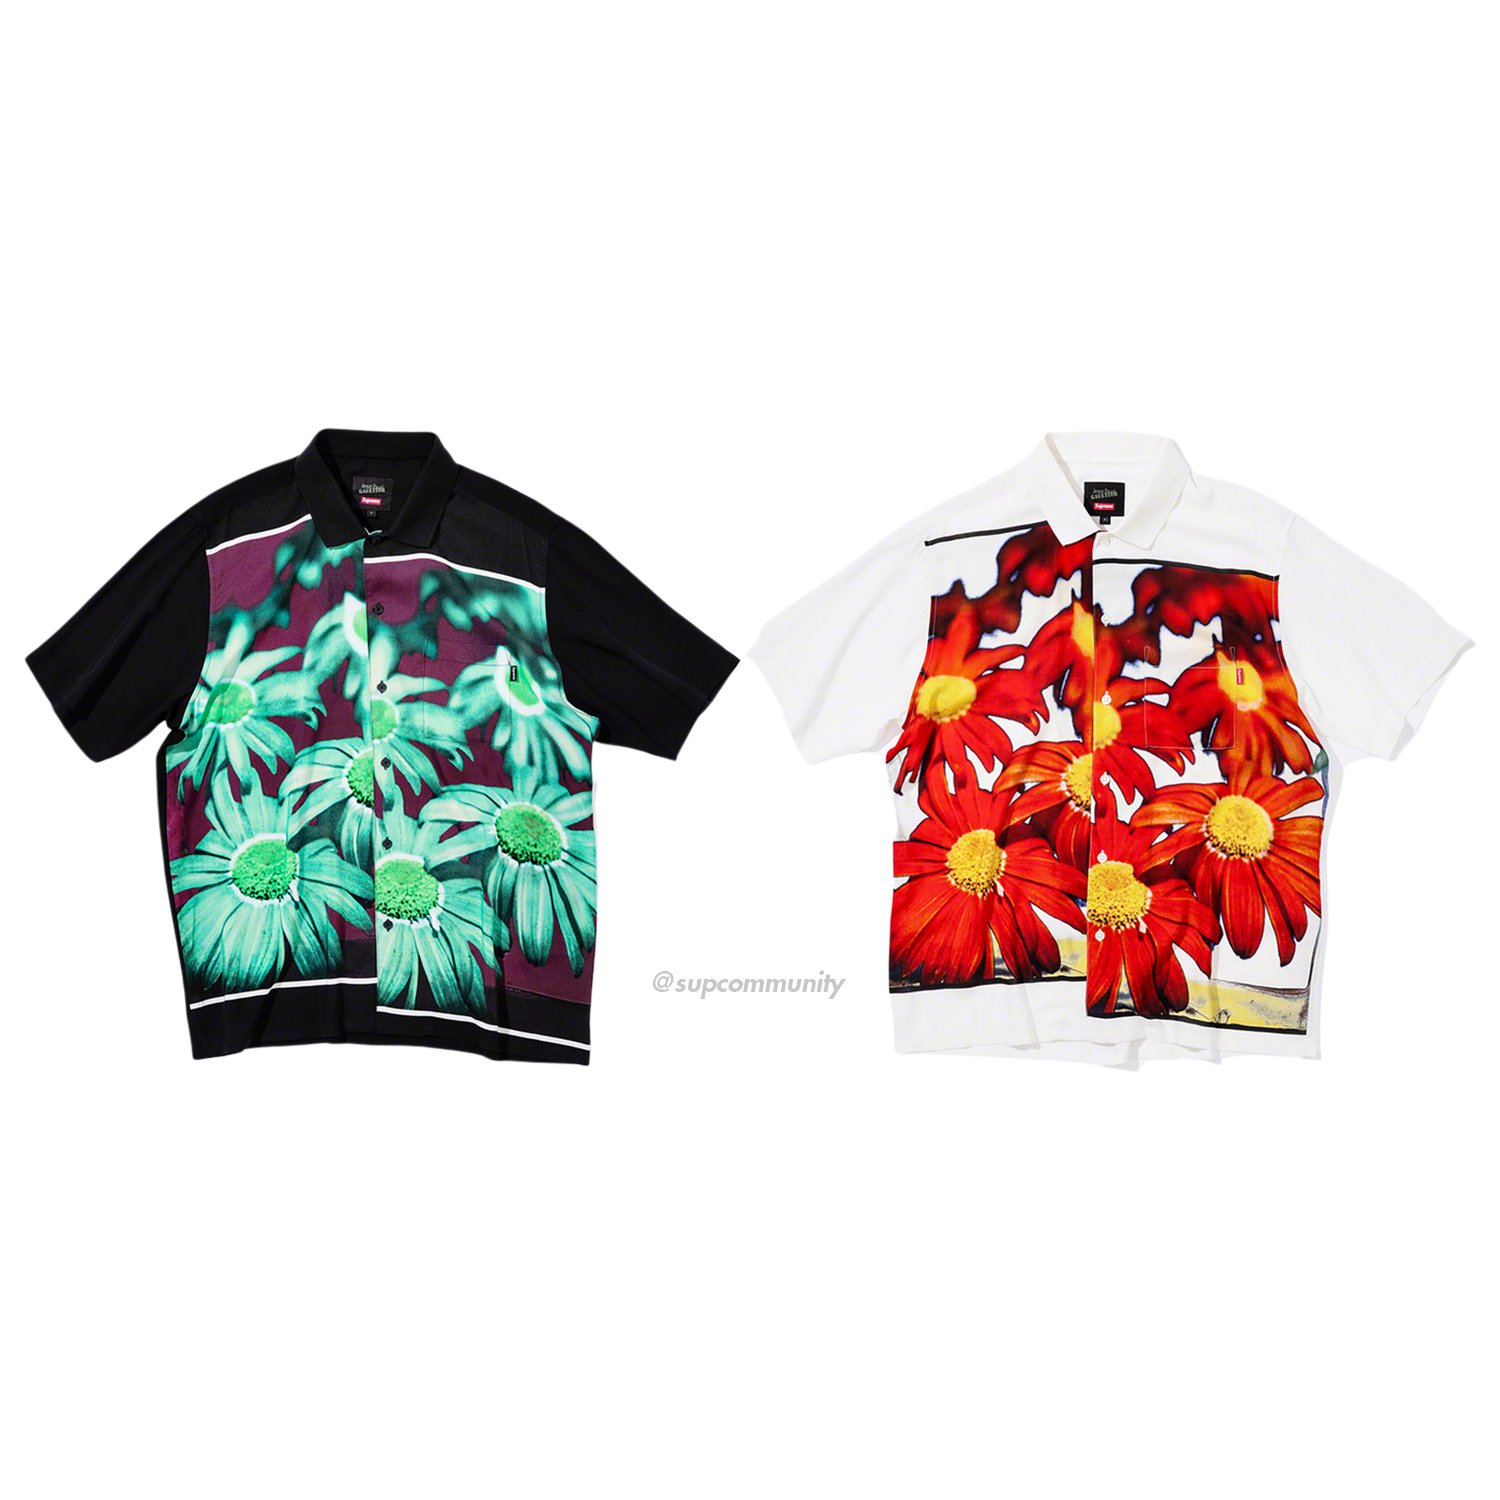 Supreme®/Jean Paul Gaultier® Flower Power Rayon Shirt - Supreme 